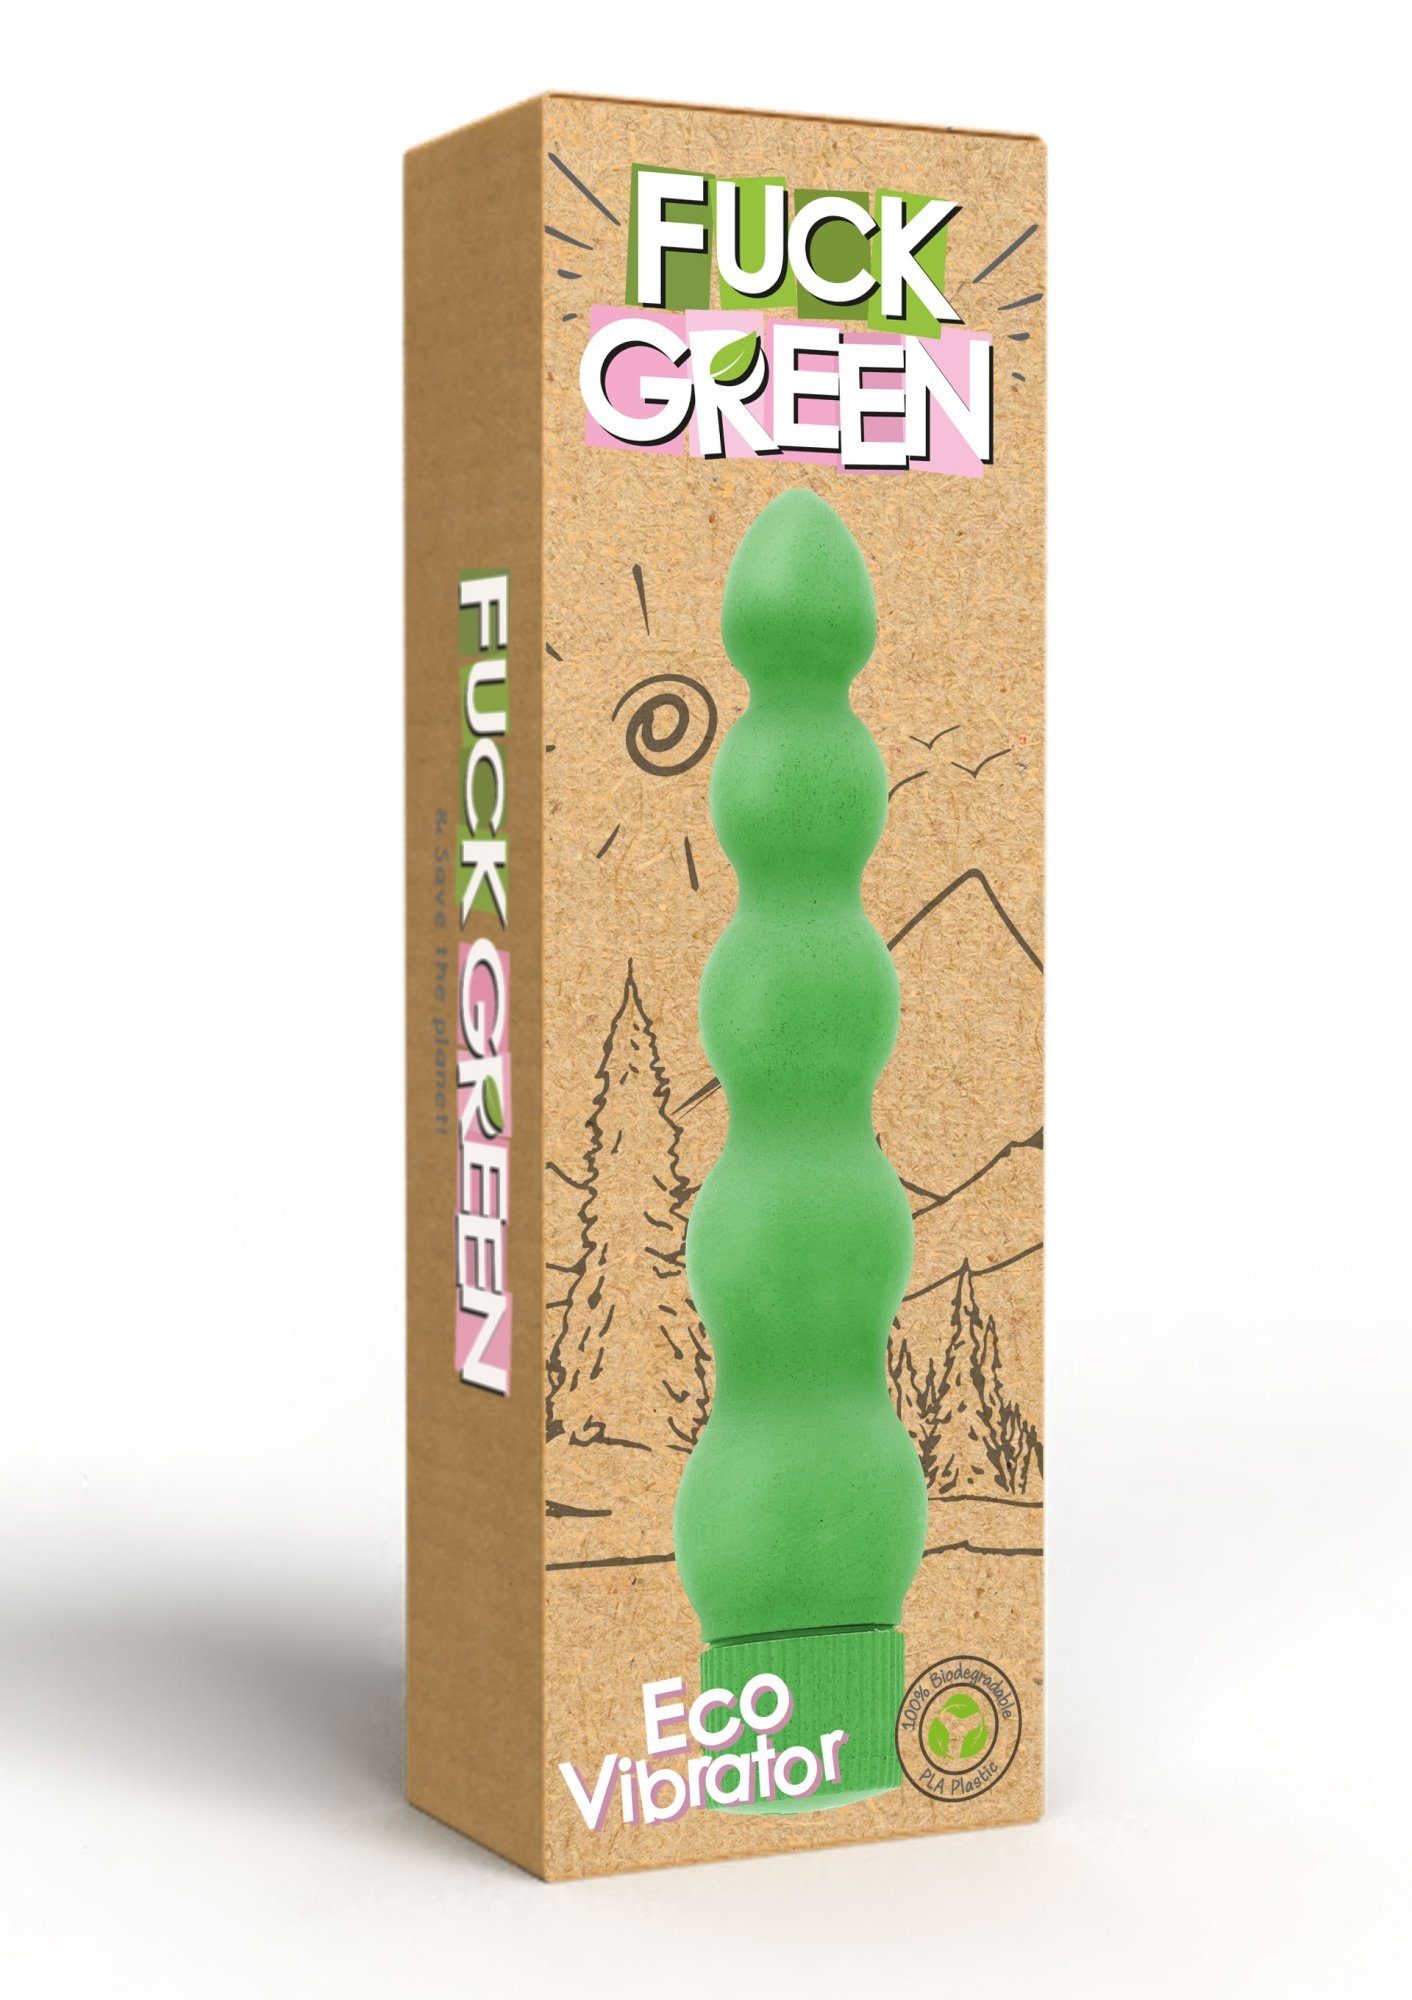 FUCK GREEN Vibrator Vibrator grün % 100 - biologisch vegan abbaubar